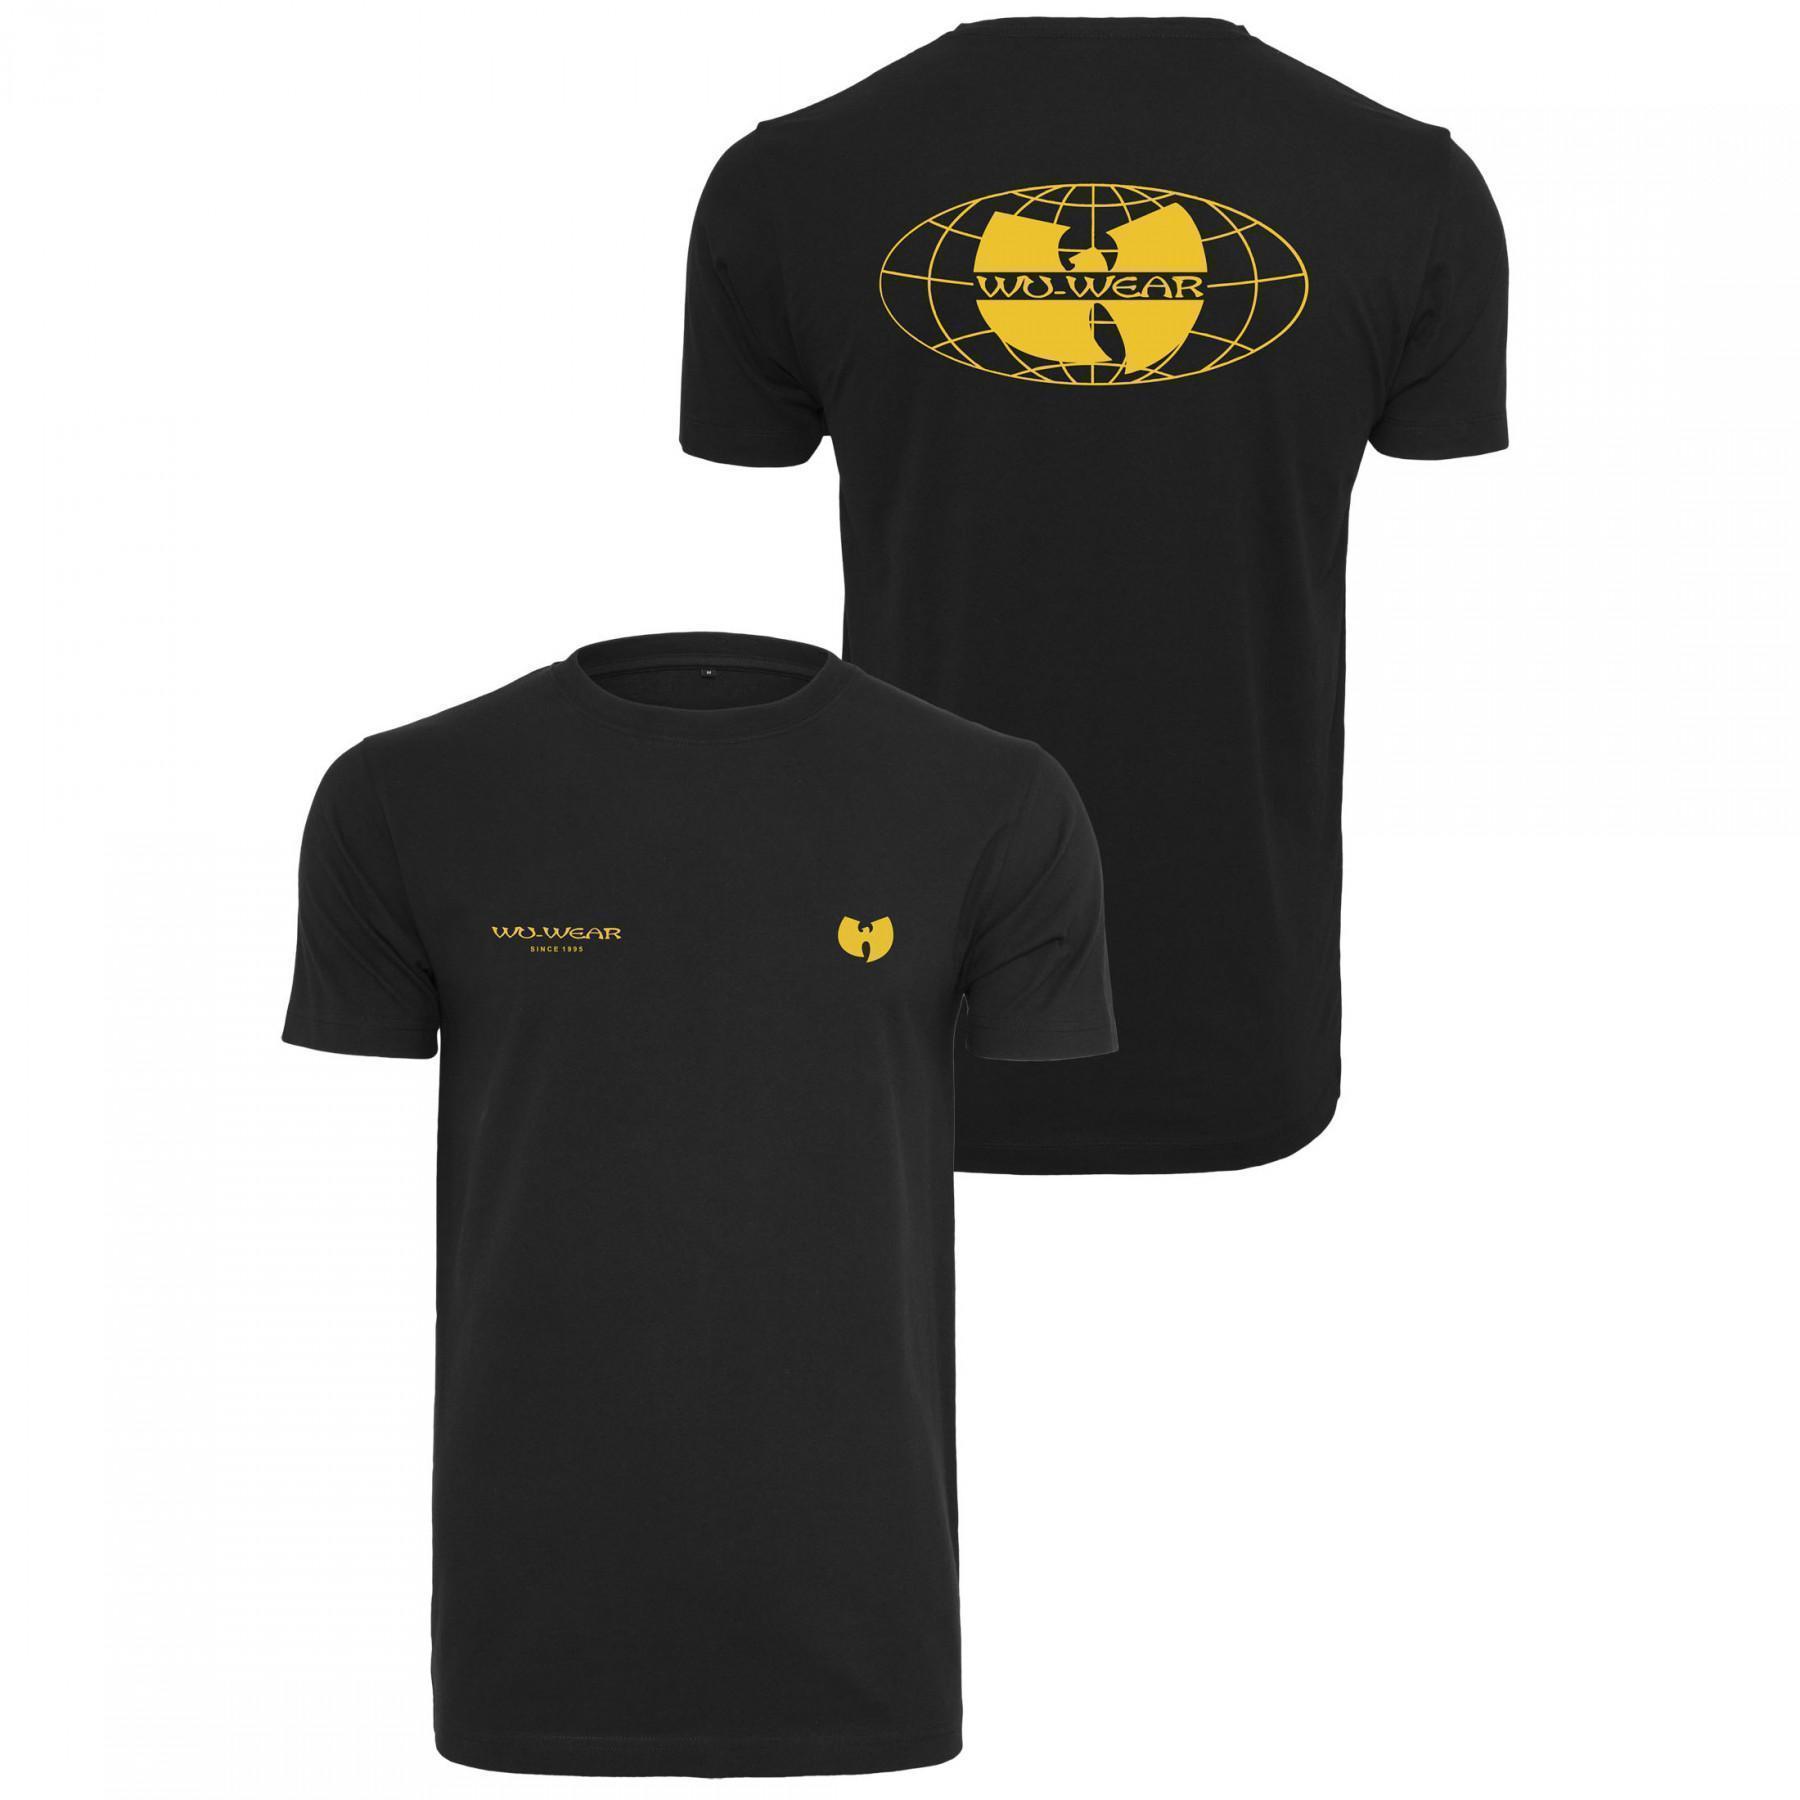 Camiseta Wu-wear multiple logo